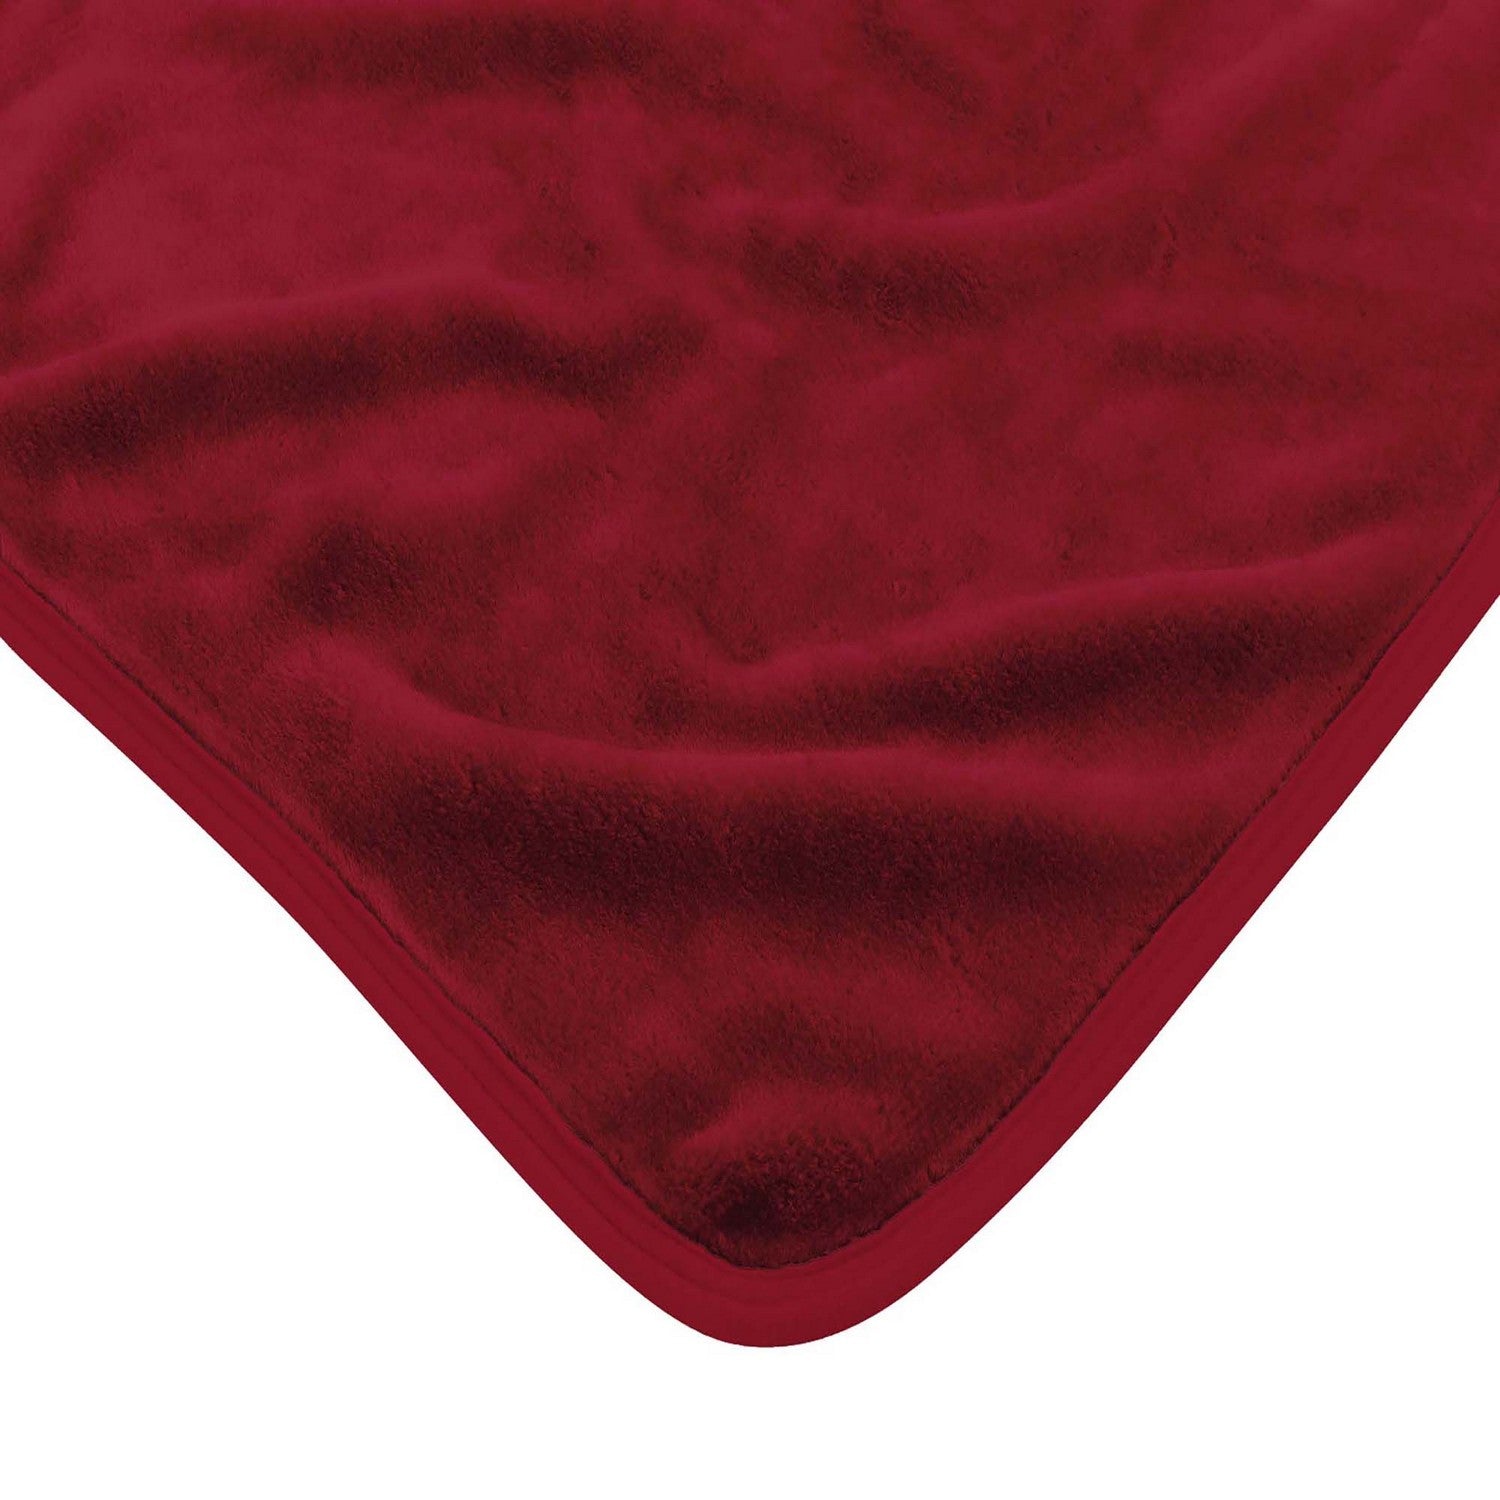 Alabama Crimson Tide NCAA Officially Licensed Raschel Throw Blanket 60x80